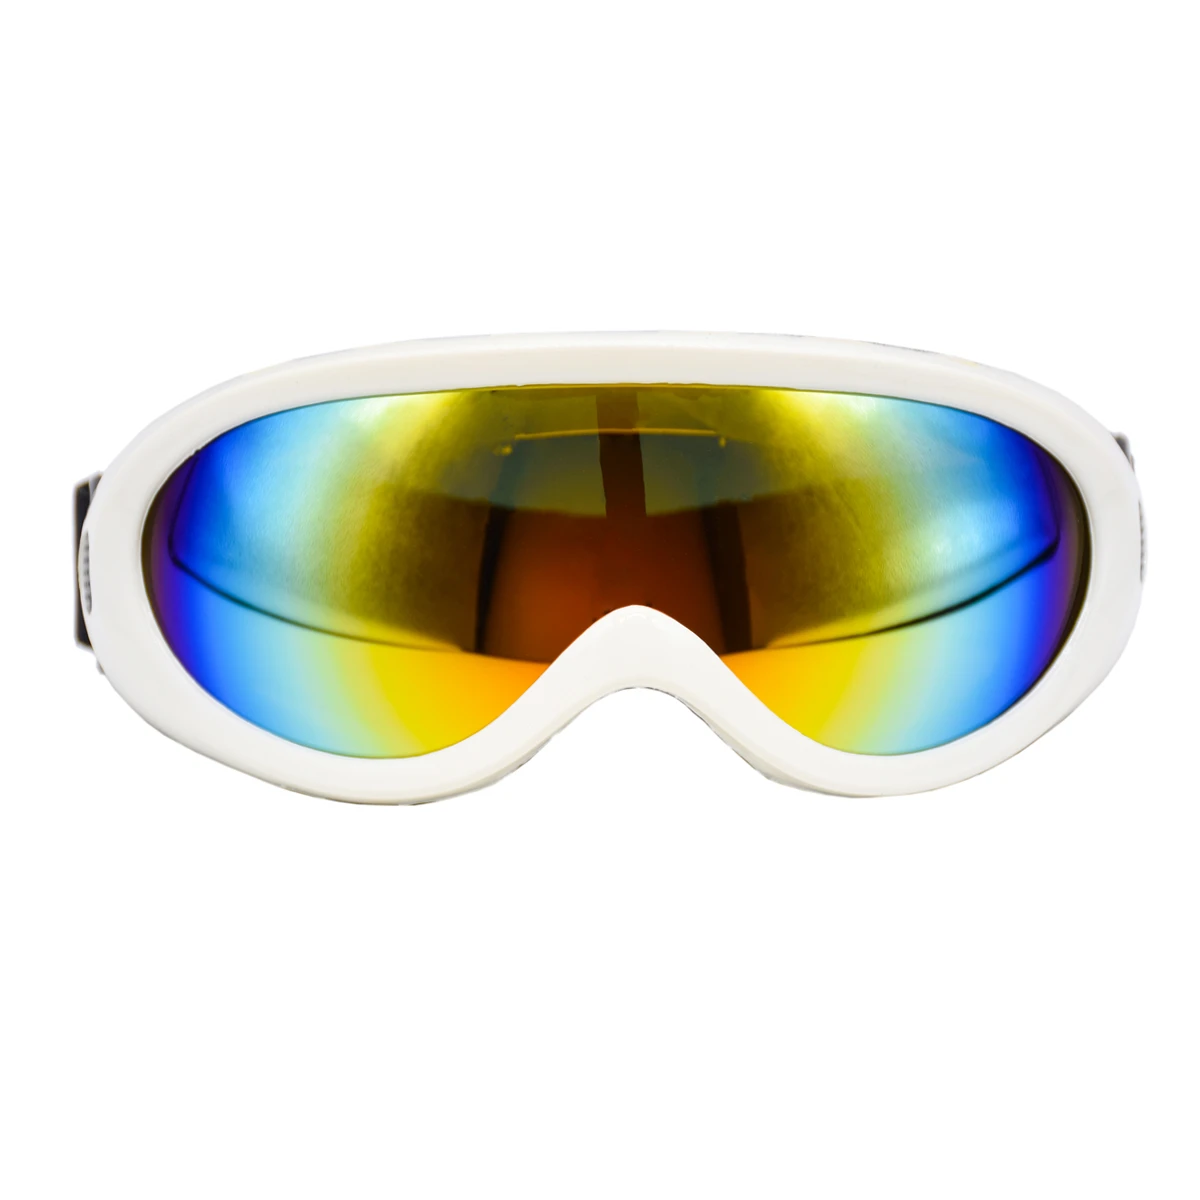 Youth Snowboard Gafas Ski Goggles Boys Girls Snow Goggle Snowboard Mask Winter oculos de neve Kids Ski Skiing Glasses Goggles - Цвет: ASGE018003